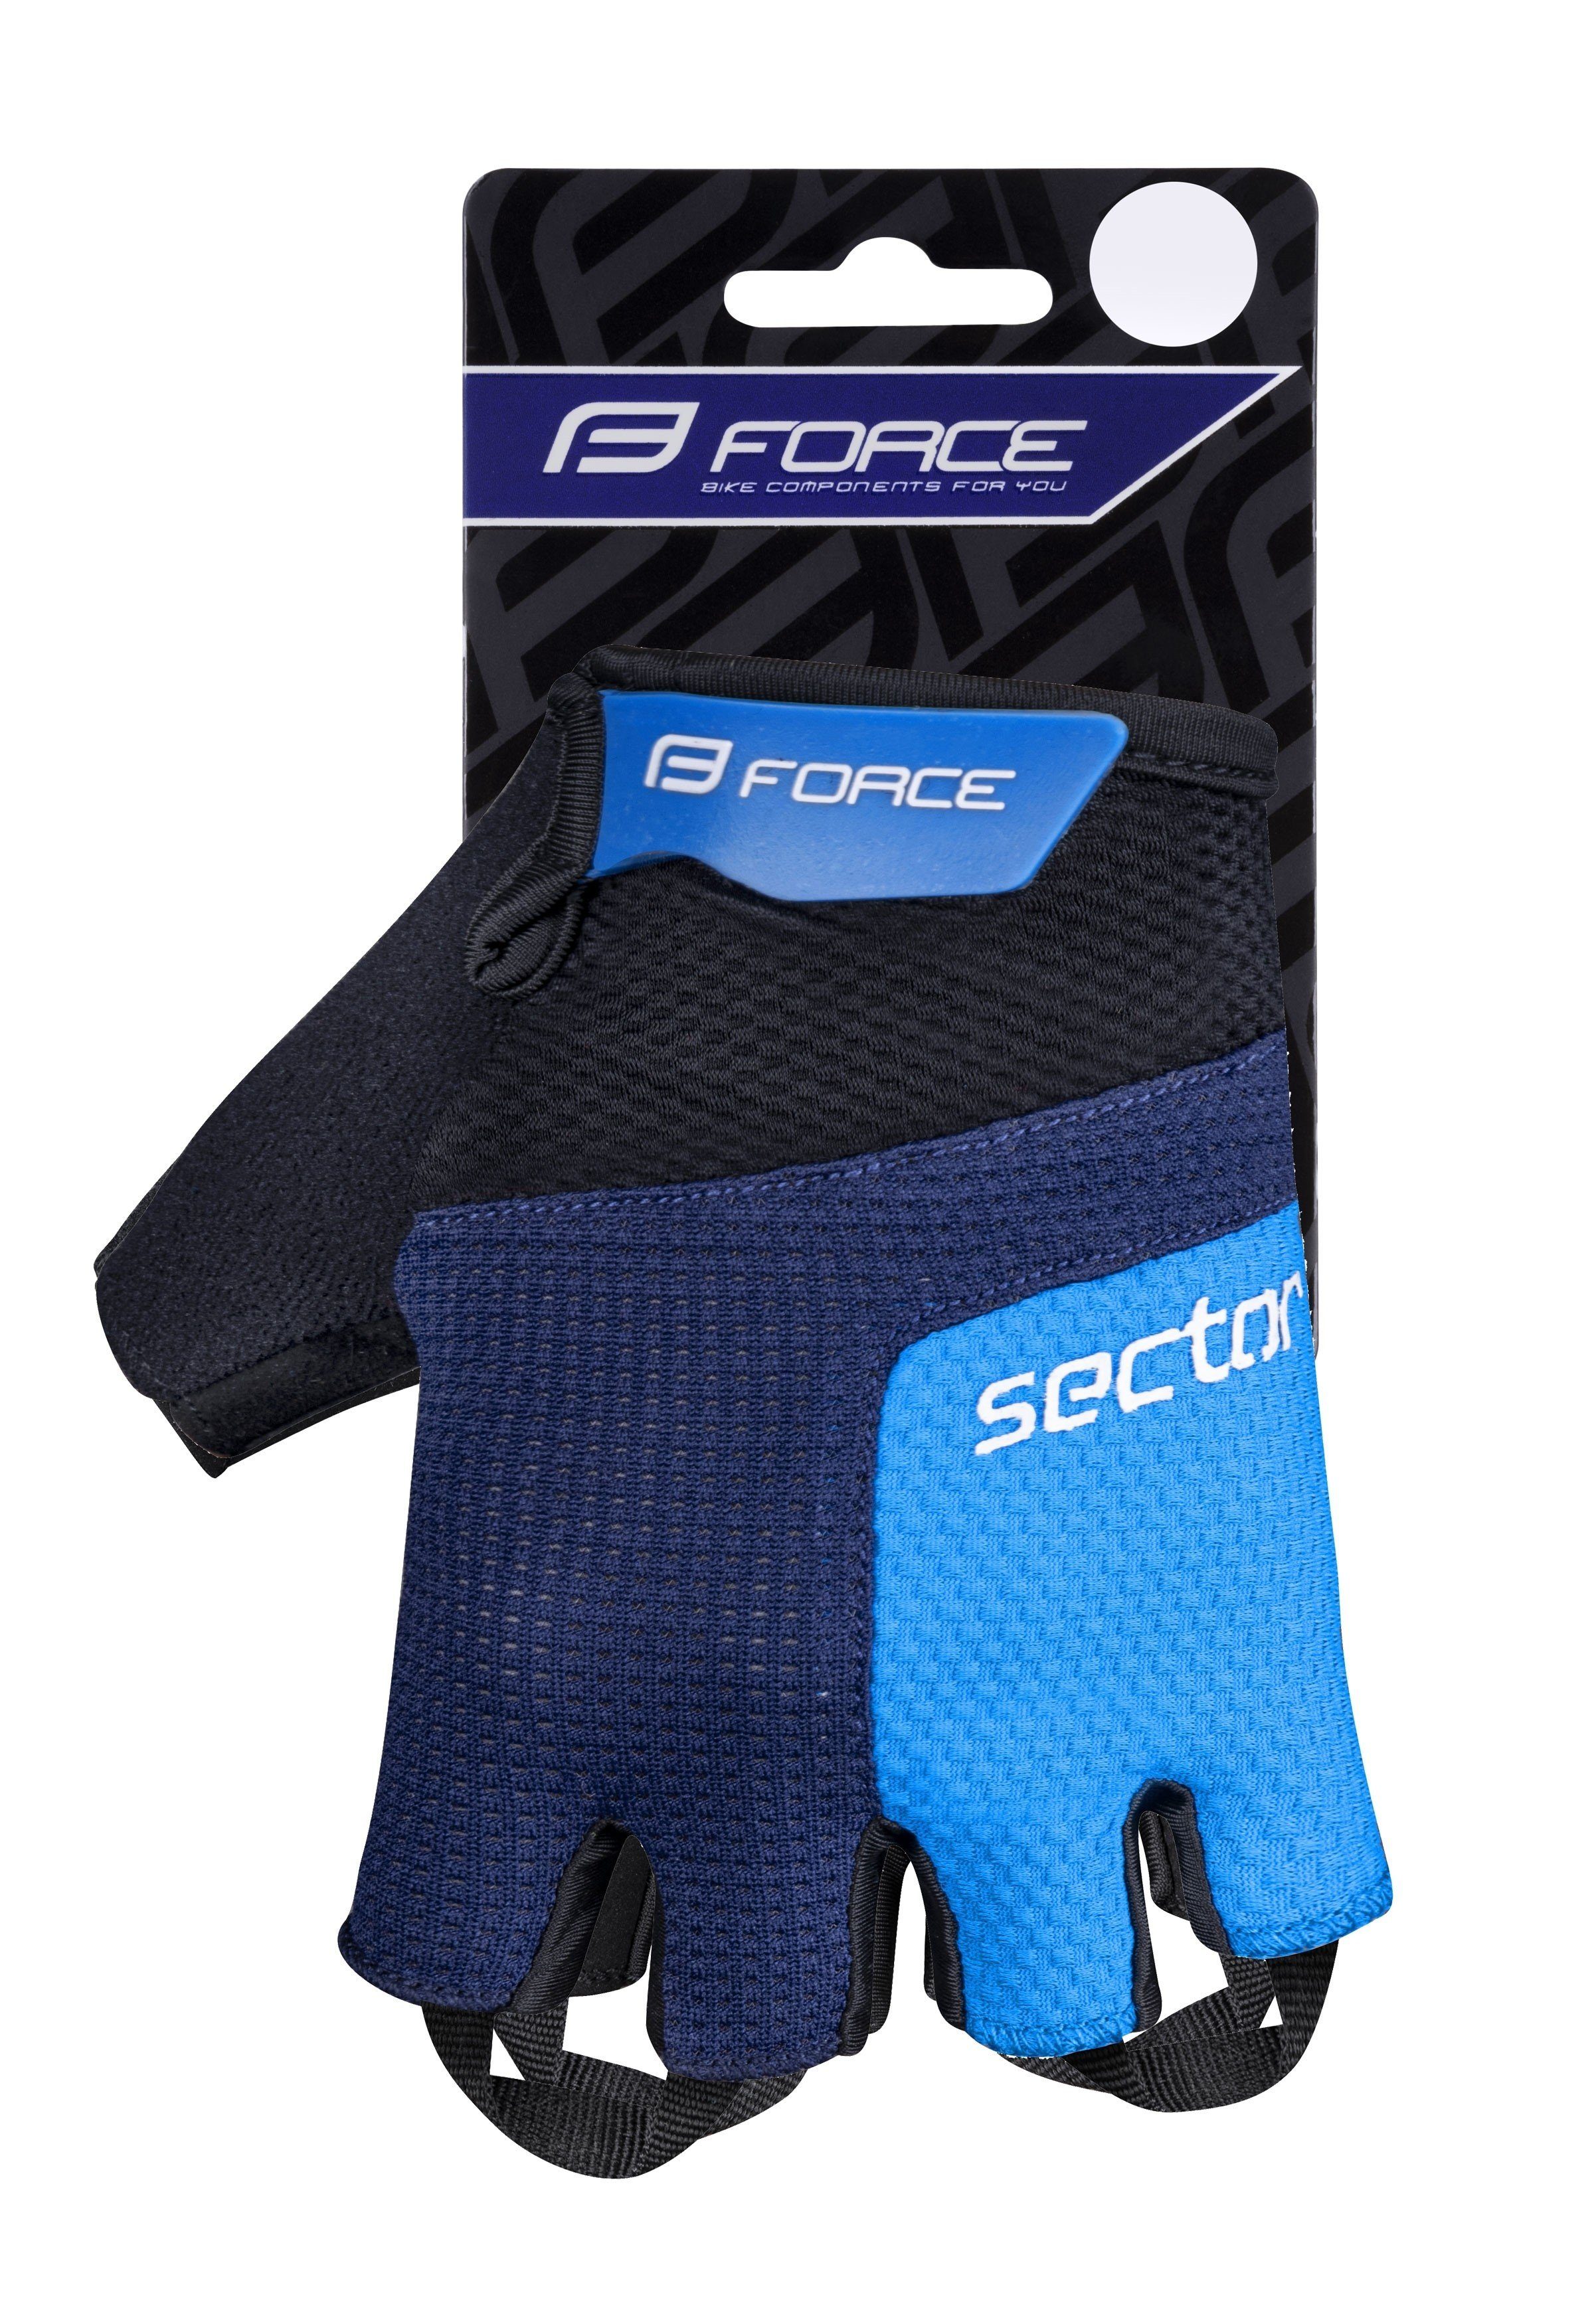 FORCE gel Fahrradhandschuhe FORCE blue black SECTOR Handschuhe